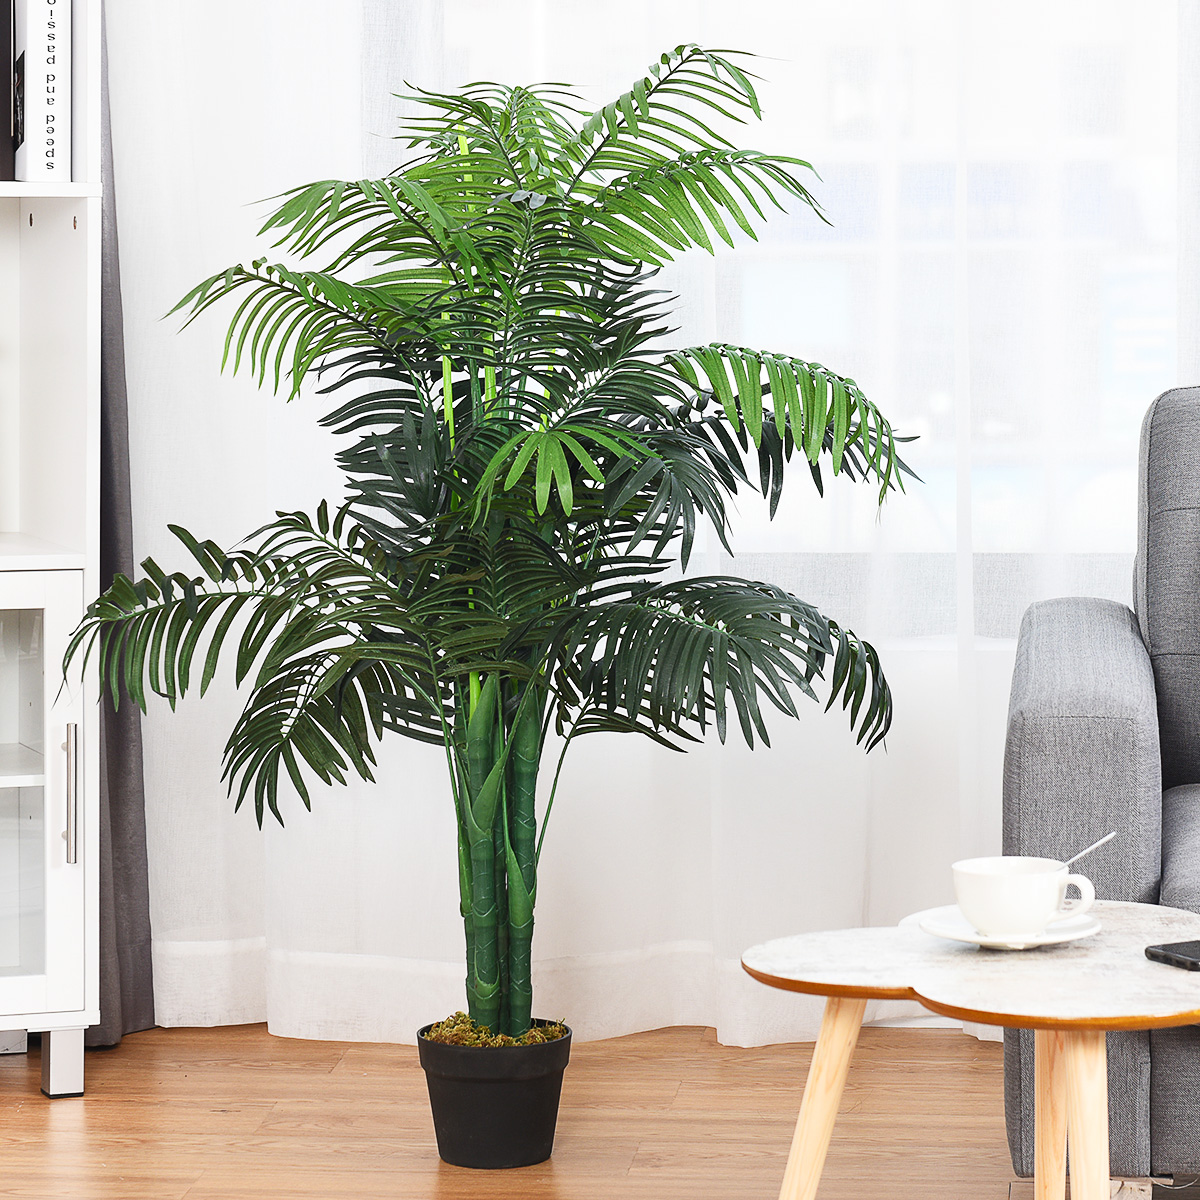 Kunstmatige plant - nep areca palmplant met kwekerij plastic pot handgemaakte kunstmatige boom